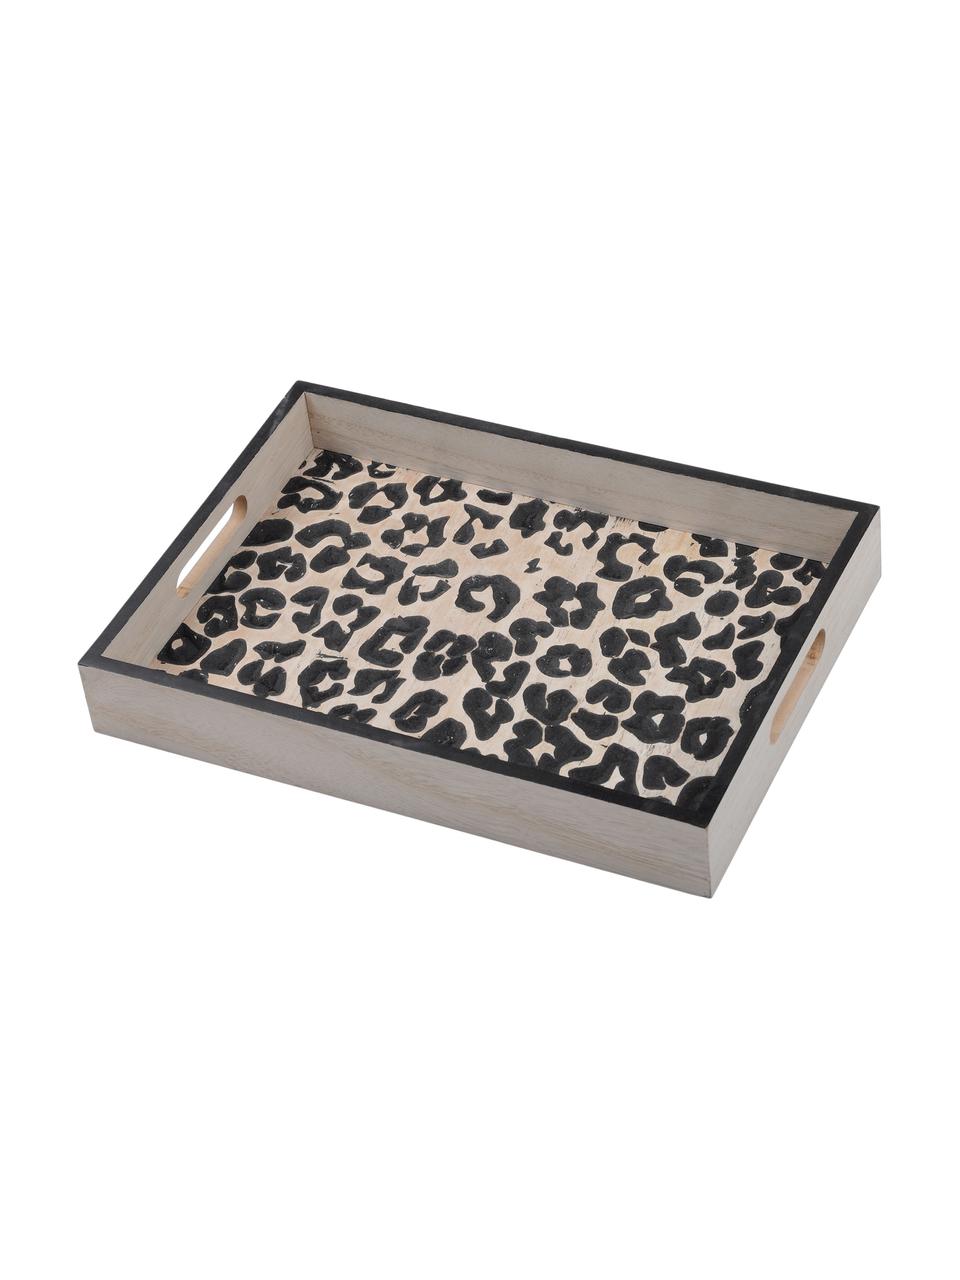 Dienblad Leopard van hout, L 35 x B 25 cm, MDF, Beige, zwart, 25 x 35 cm